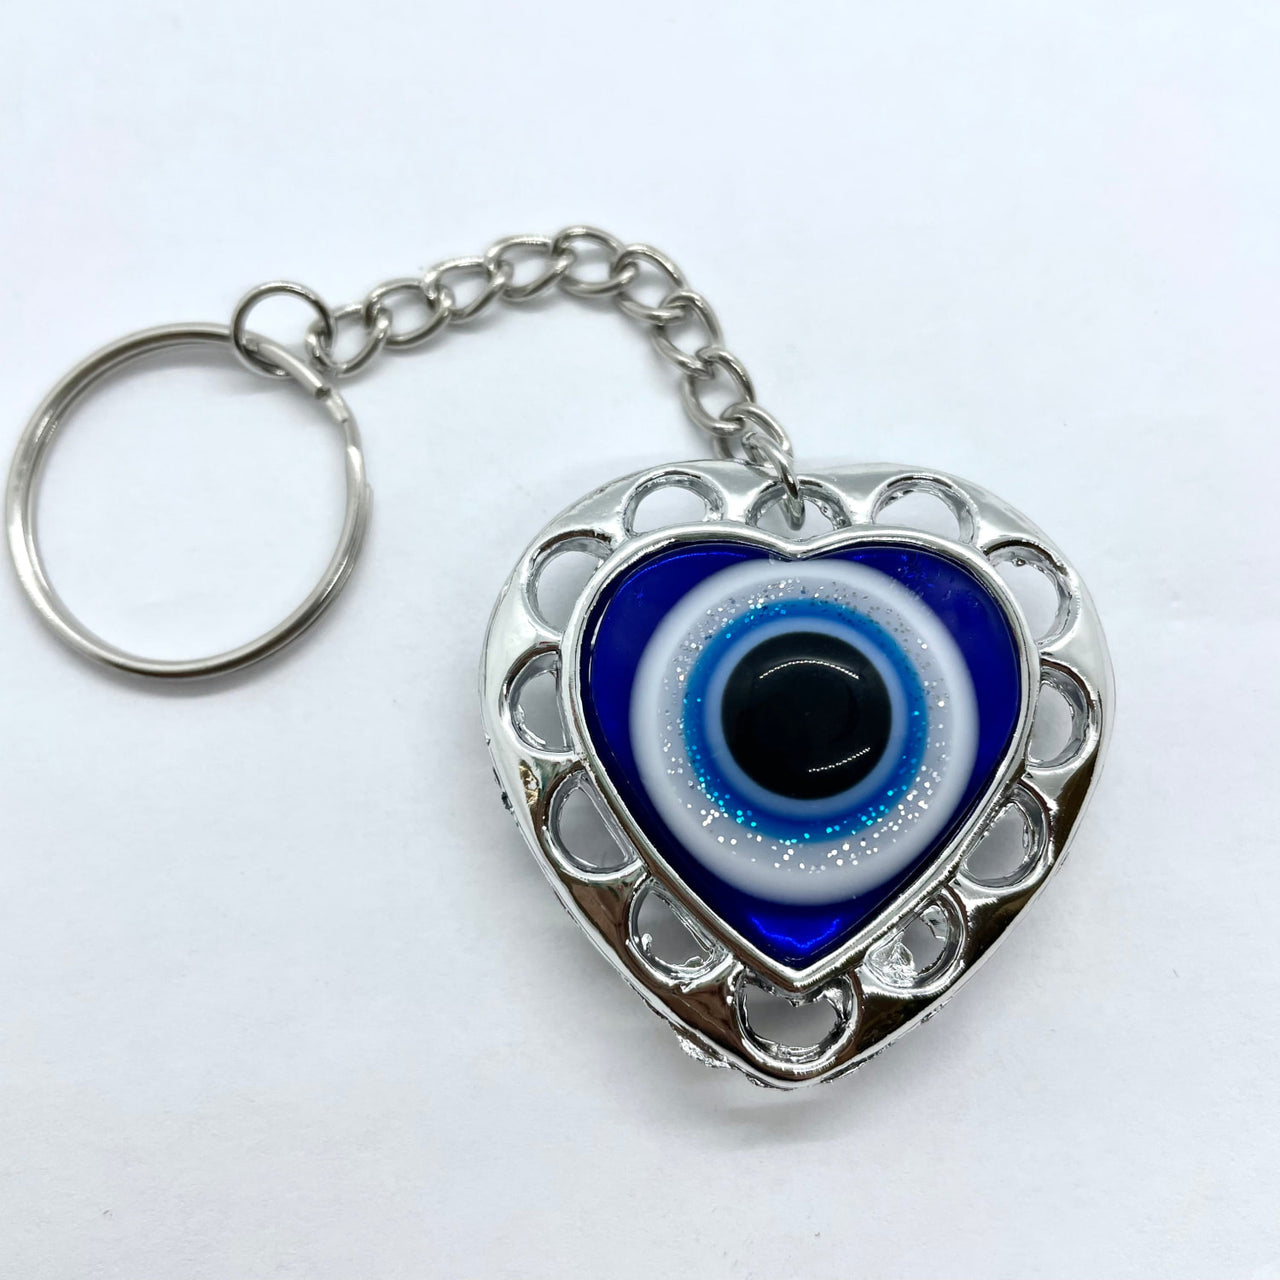 Blue heart-shaped keychain with silver heart evil eye - Evil Eye Keychain/Ornaments #Q198